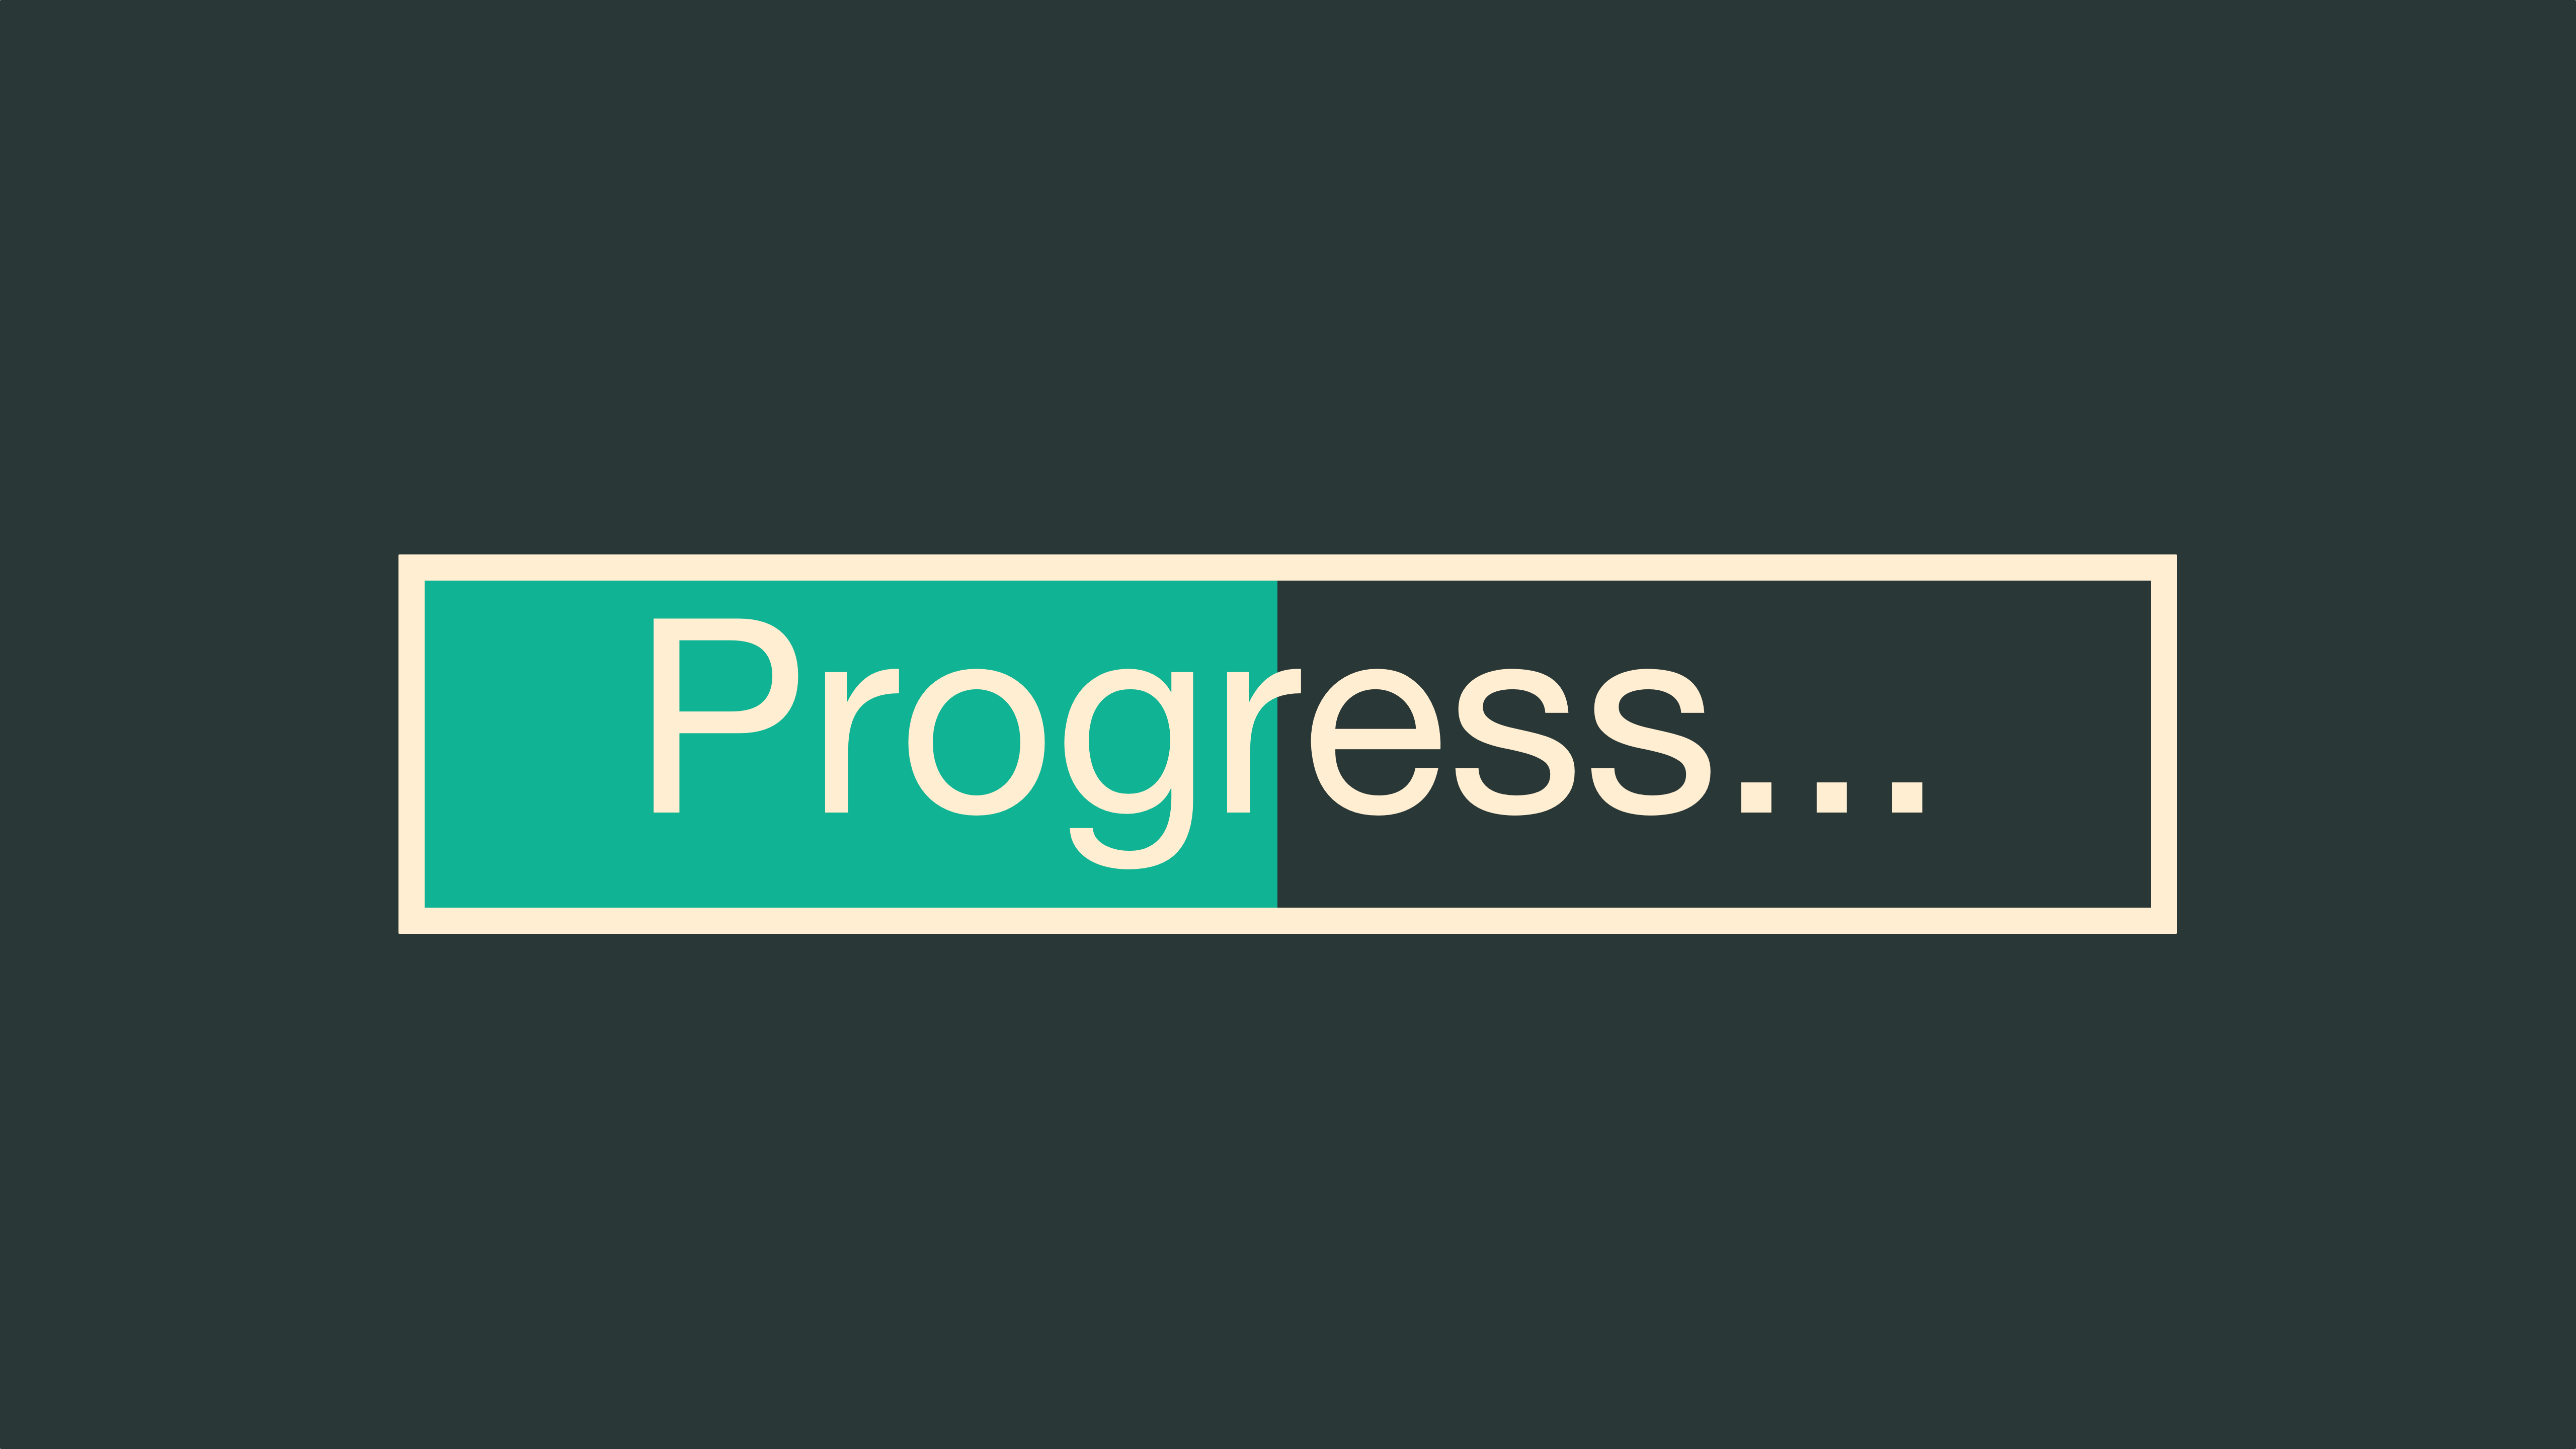 Progress Wallpaper. Work Progress Wallpaper, Carousel of Progress Wallpaper and In Progress Wallpaper